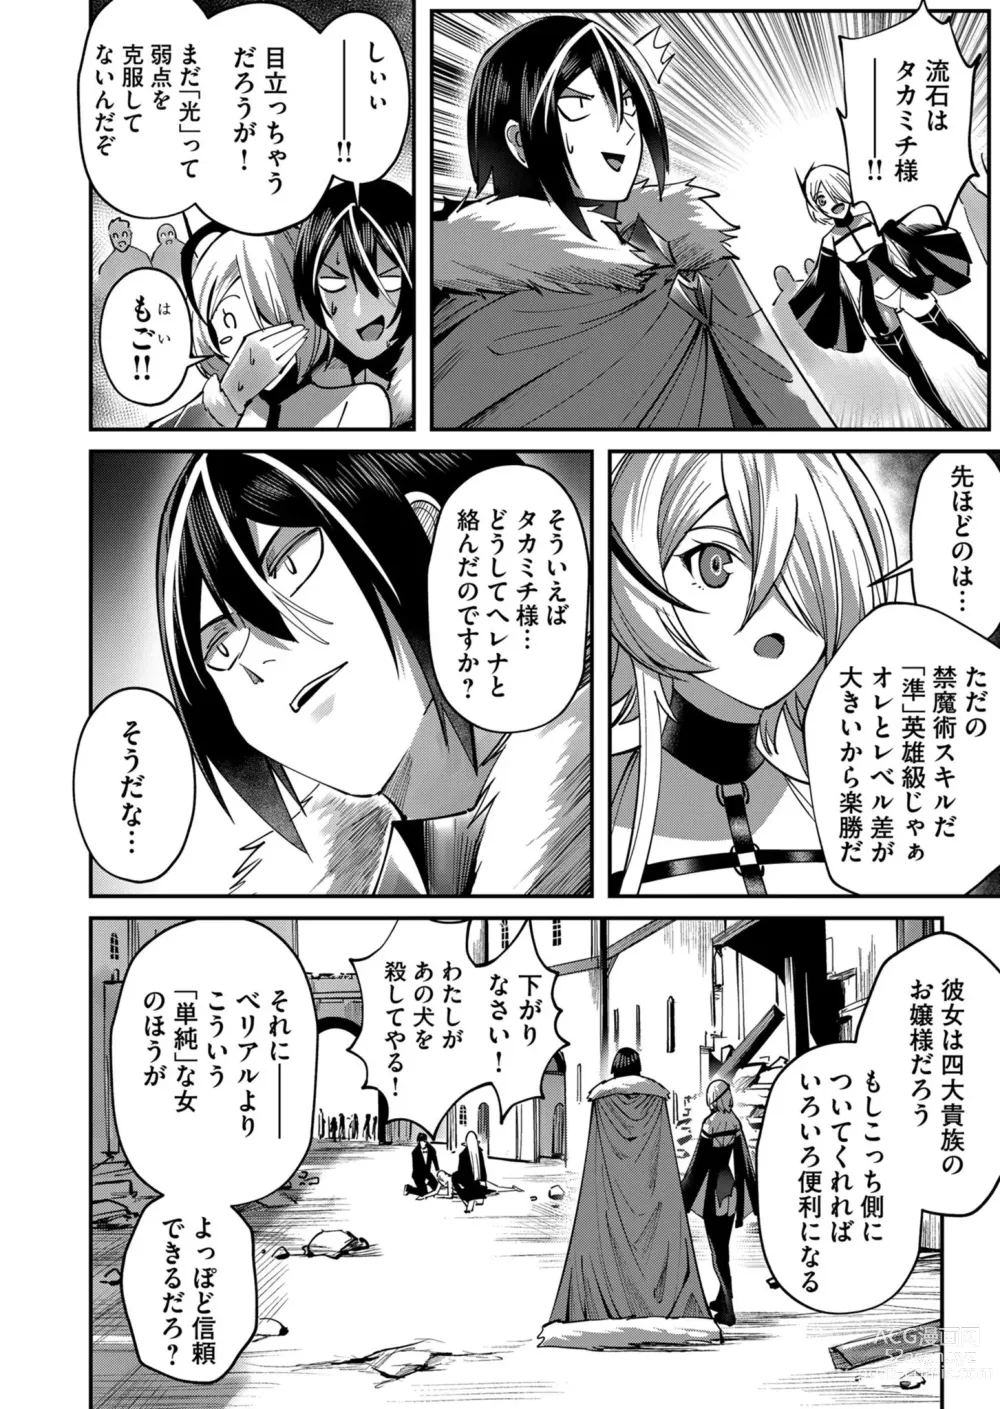 Page 28 of manga Kichiku Eiyuu Vol.03